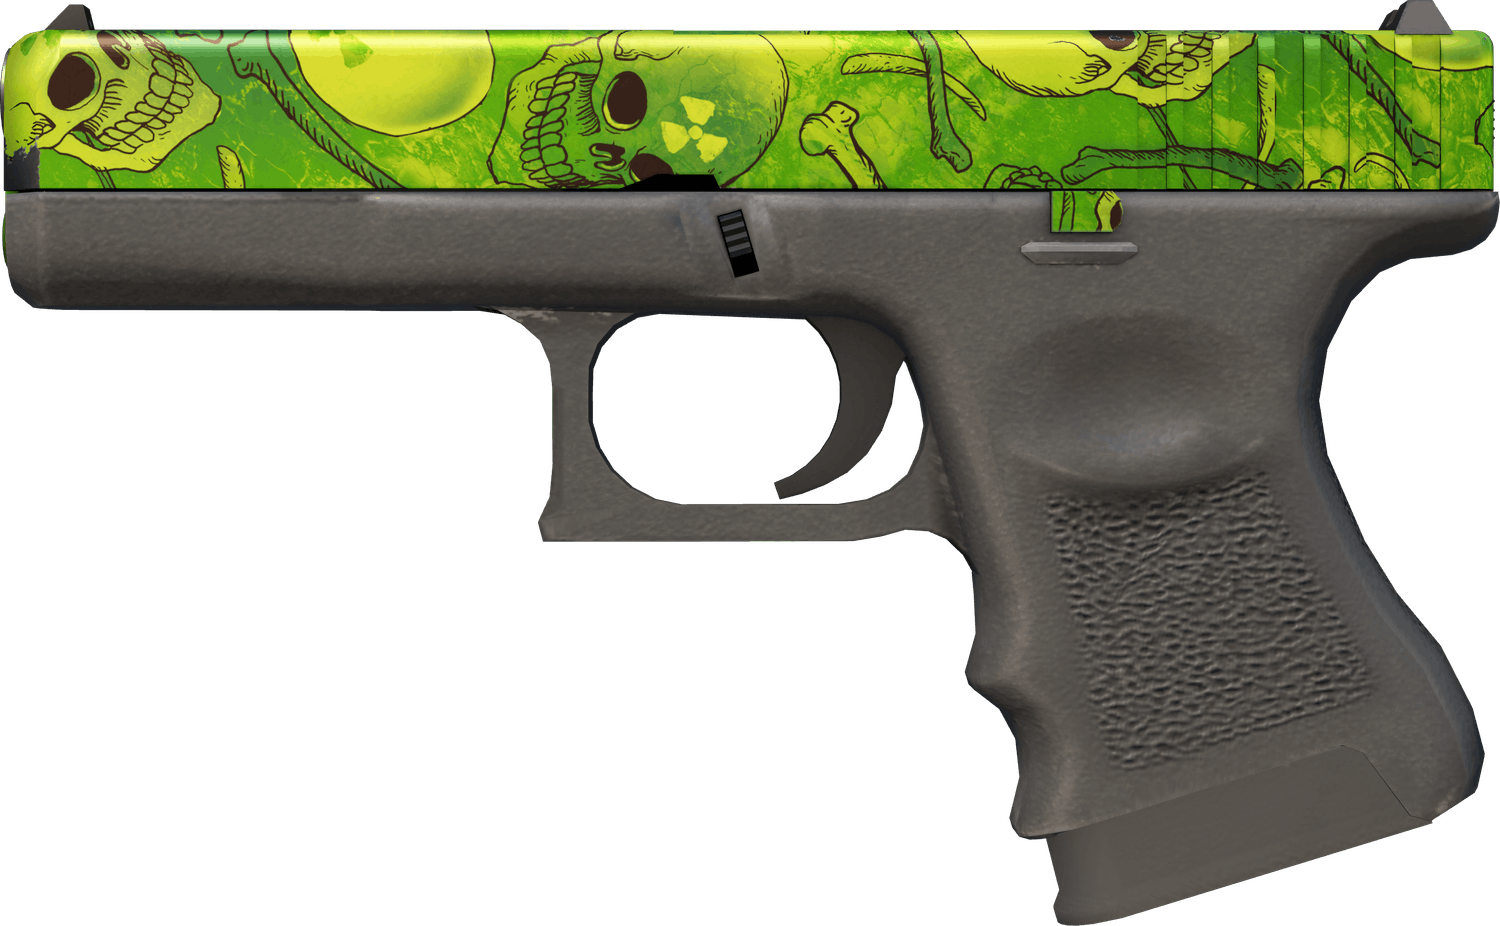 Glock-18 | Nuclear Garden (Minimal Wear)